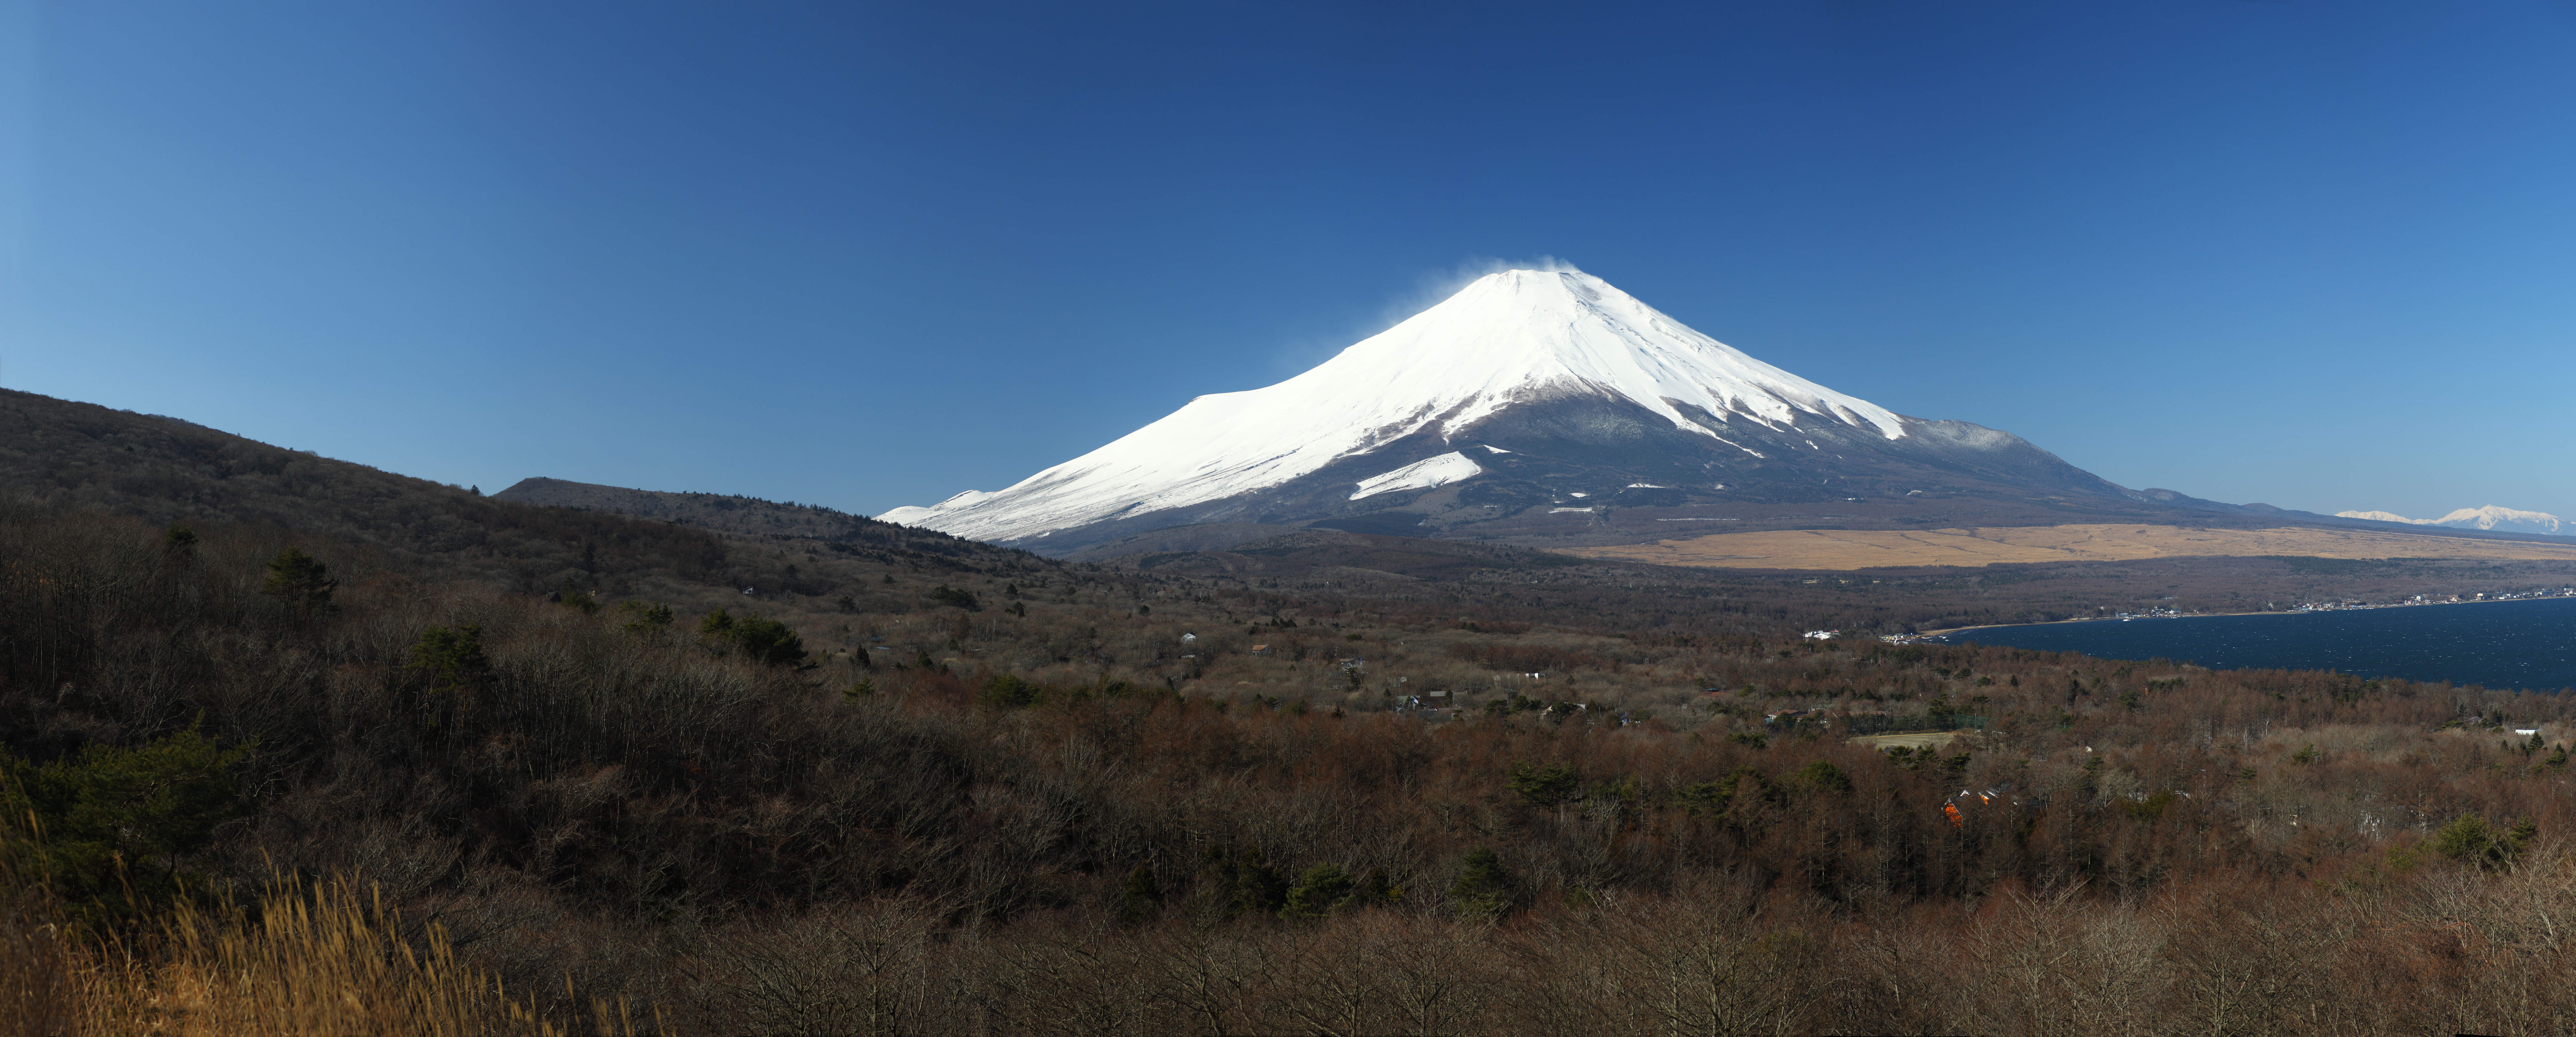 fotografia, material, livra, ajardine, imagine, proveja fotografia,Mt. Fuji, Mt. Fuji, Yamanakako, , 